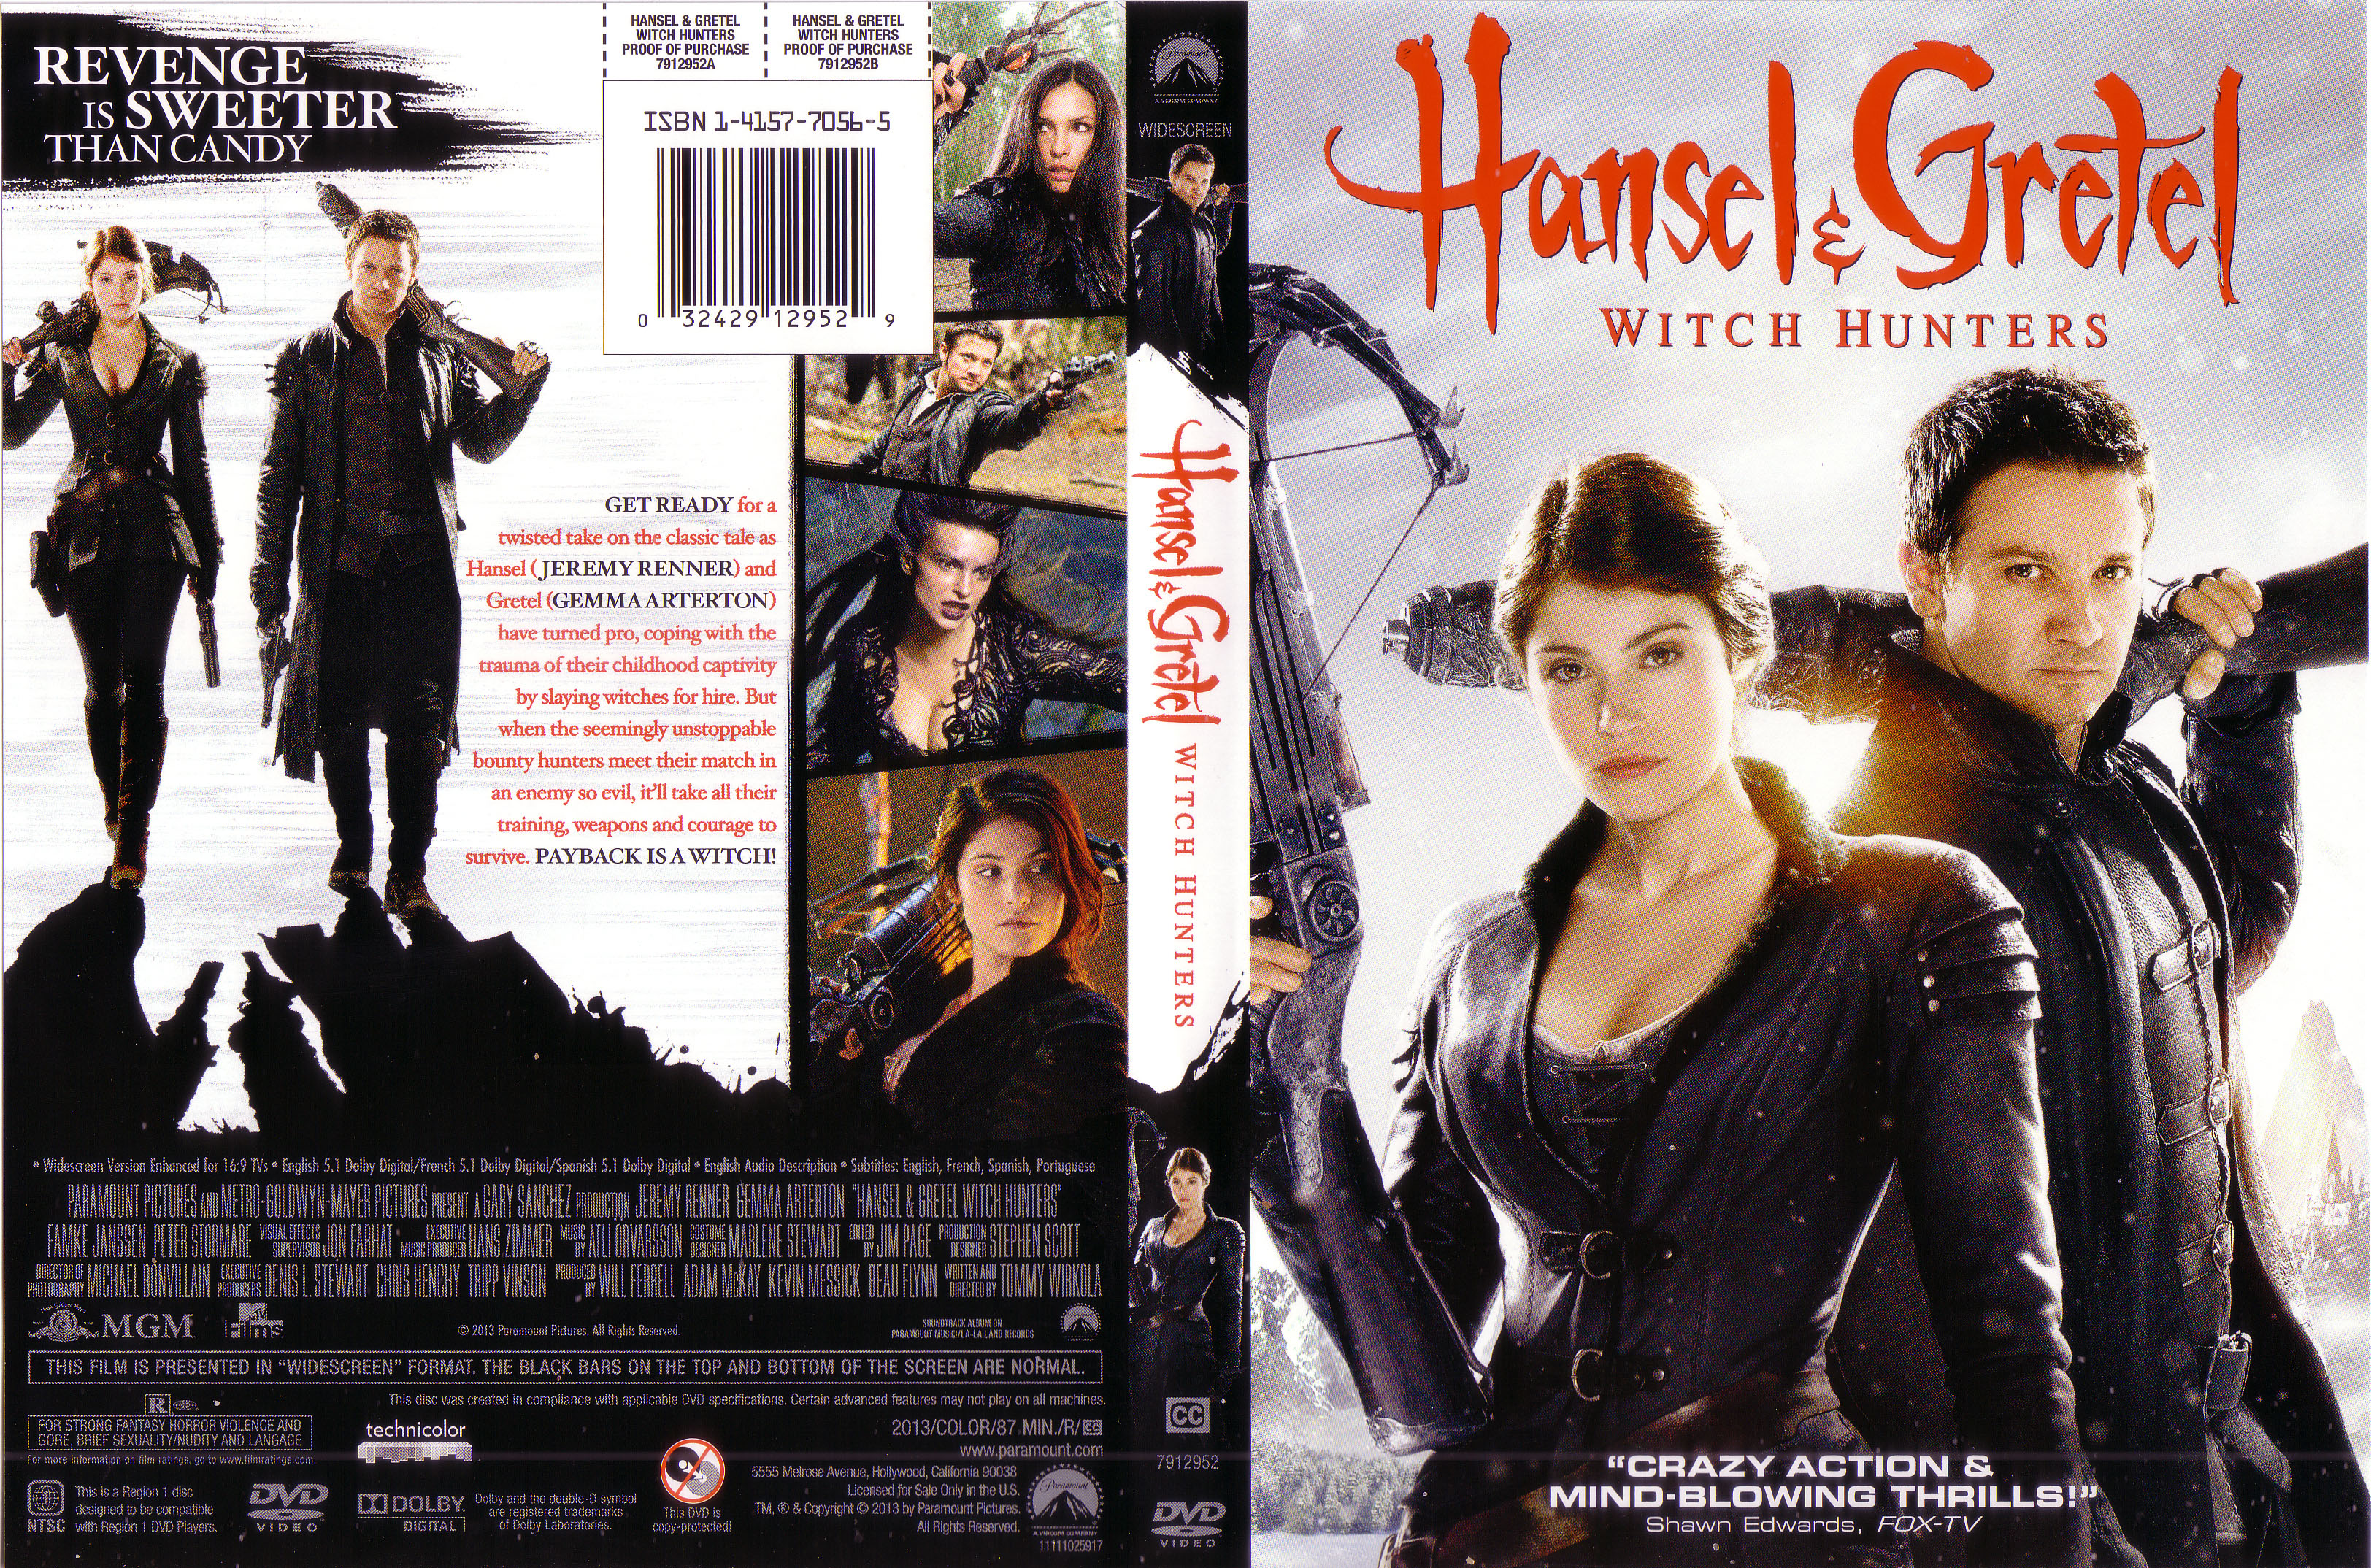 Jaquette DVD Hansel et Gretel Witch Hunters Zone 1